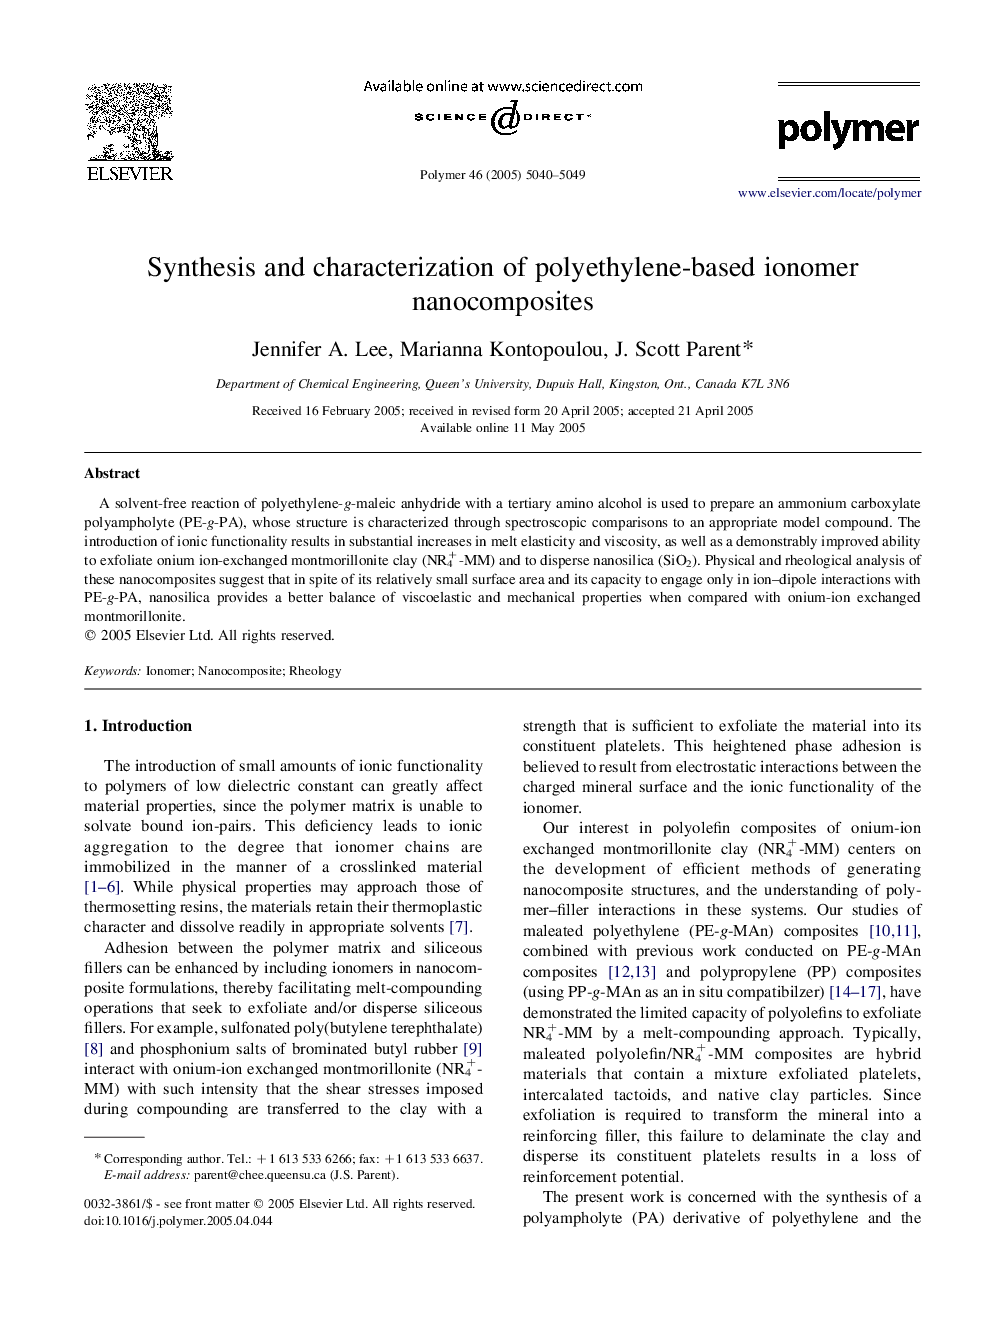 Synthesis and characterization of polyethylene-based ionomer nanocomposites